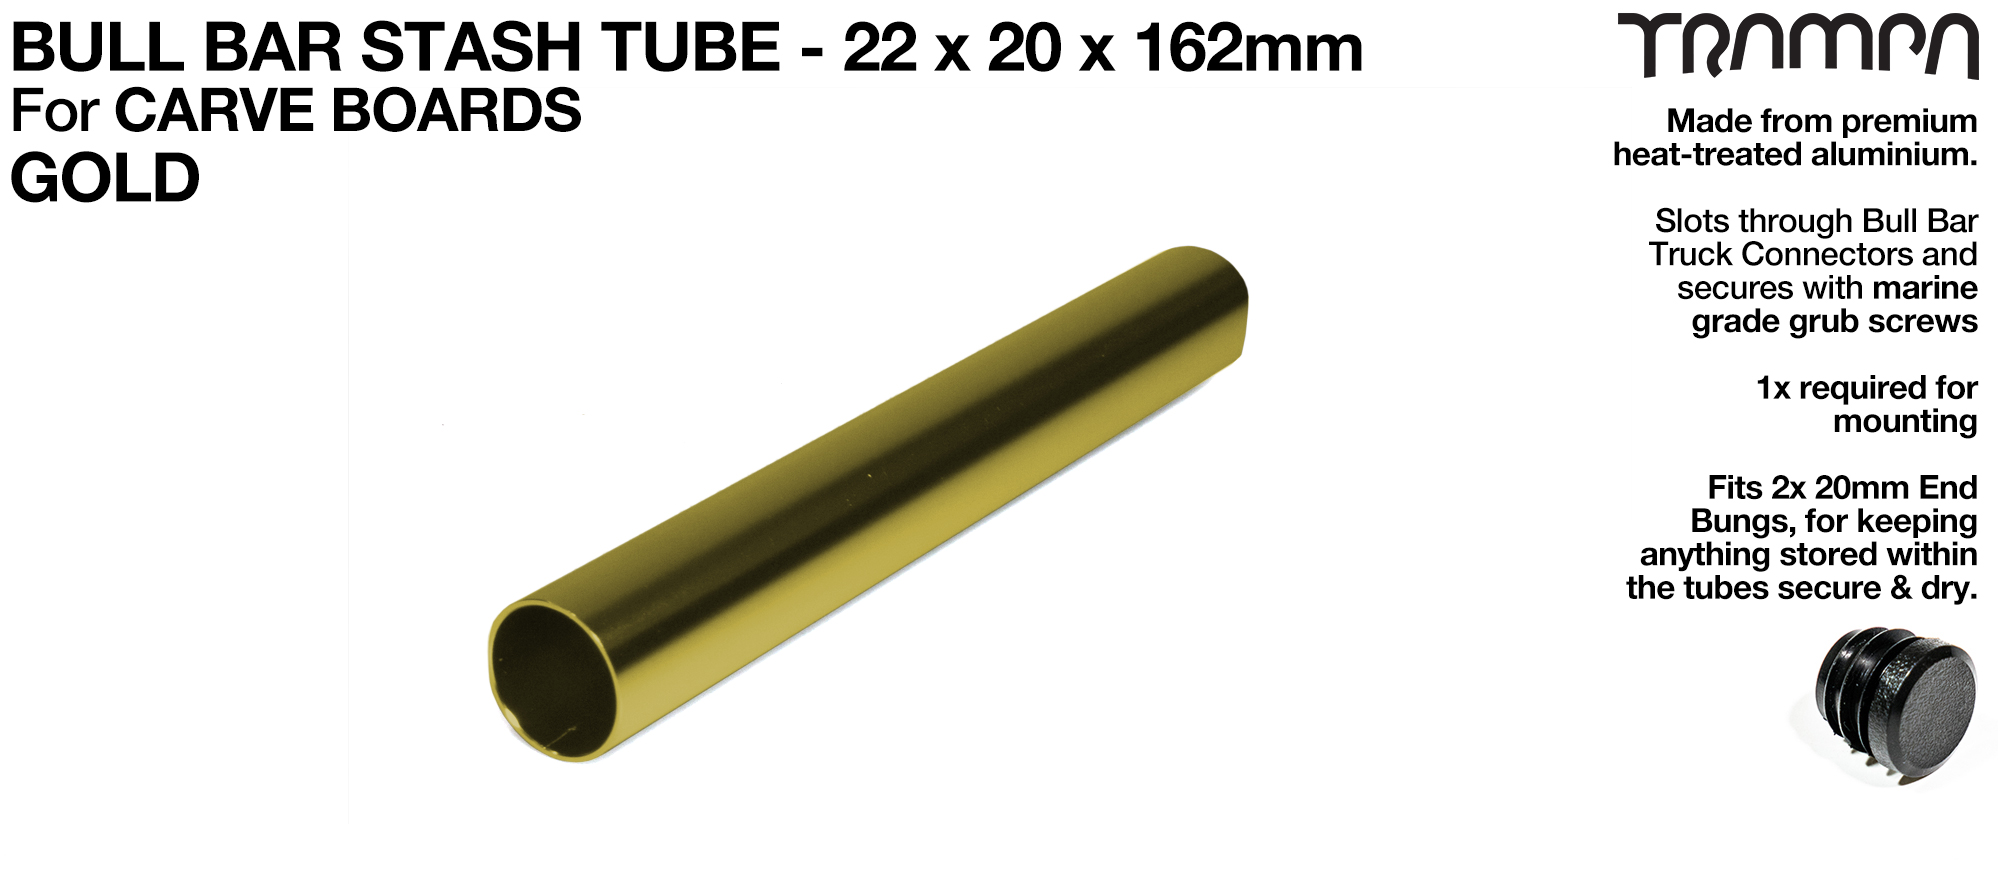 Carve Board Bull Bar Hollow Aluminium Stash Tube - GOLD 22 x 20 x 162 mm 